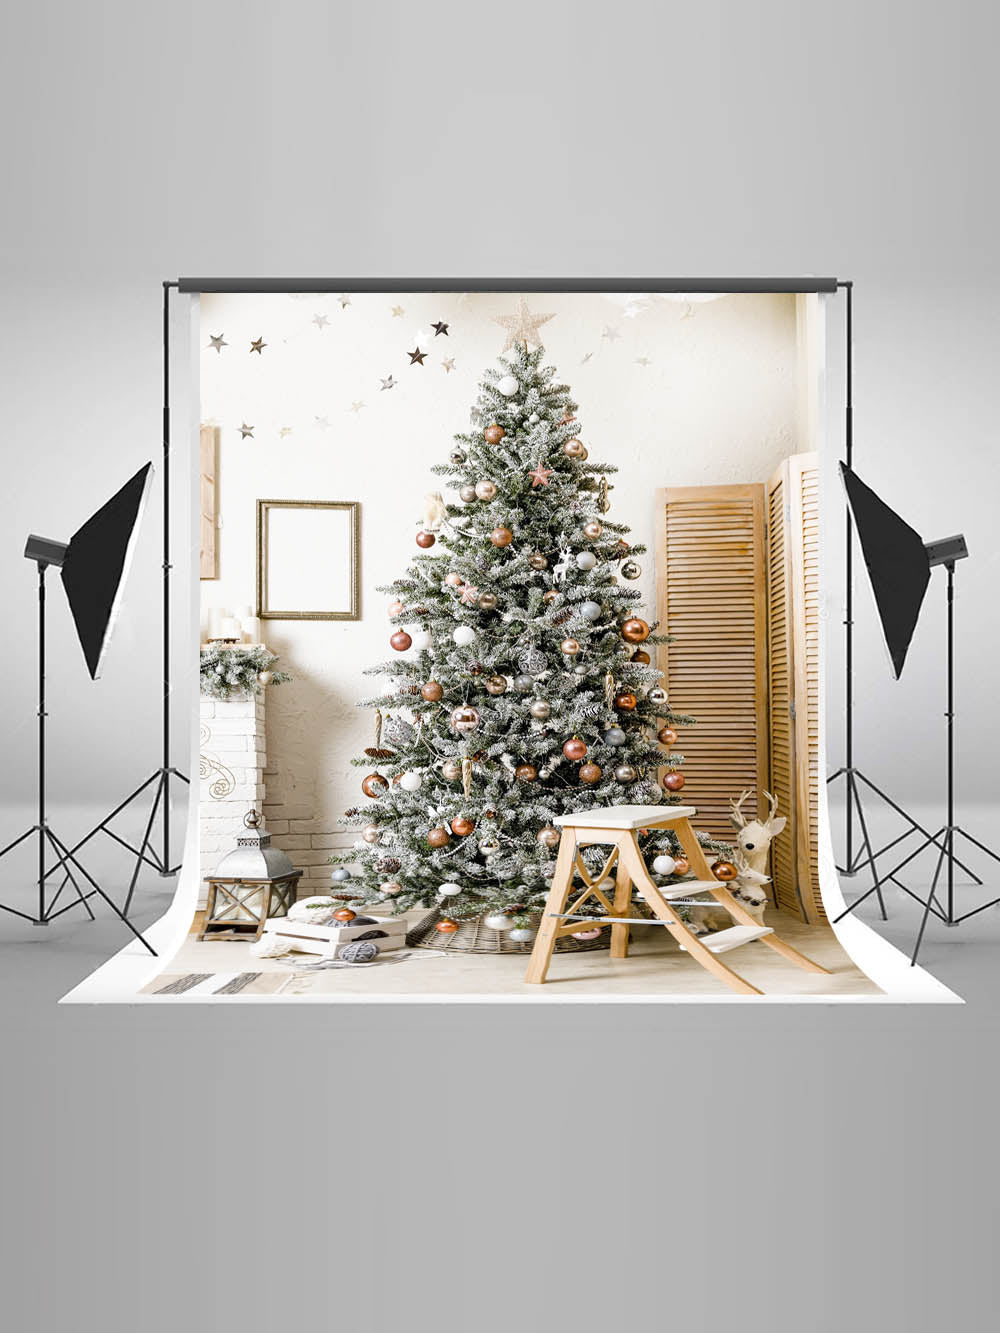 Christmas Tree Decored Balls And Stars Against Brick Wall IBD-246904